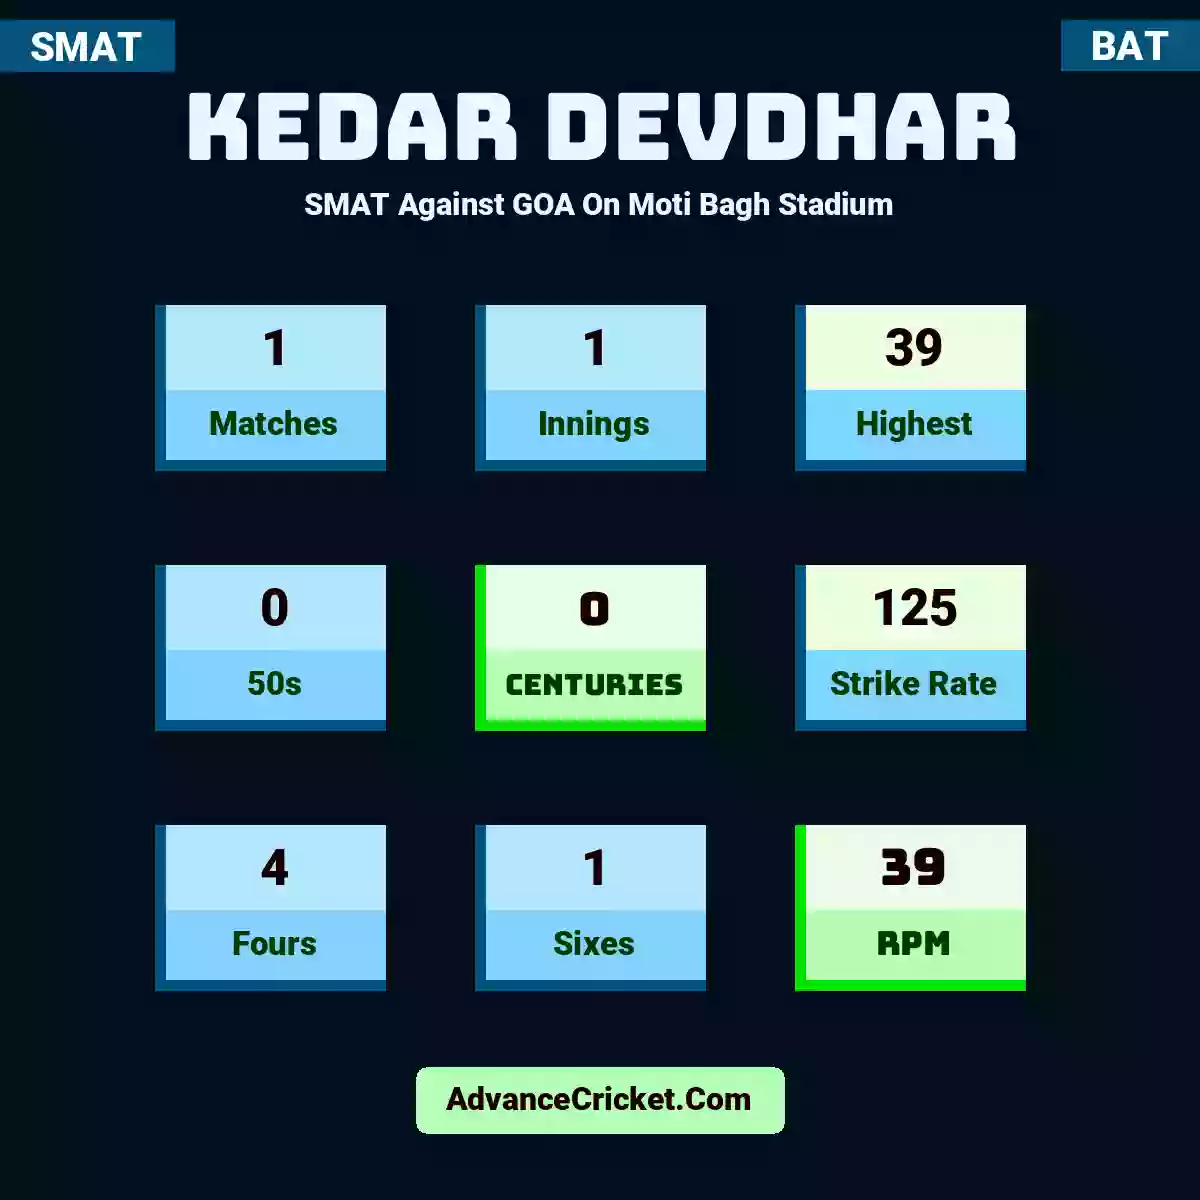 Kedar Devdhar SMAT  Against GOA On Moti Bagh Stadium, Kedar Devdhar played 1 matches, scored 39 runs as highest, 0 half-centuries, and 0 centuries, with a strike rate of 125. K.Devdhar hit 4 fours and 1 sixes, with an RPM of 39.